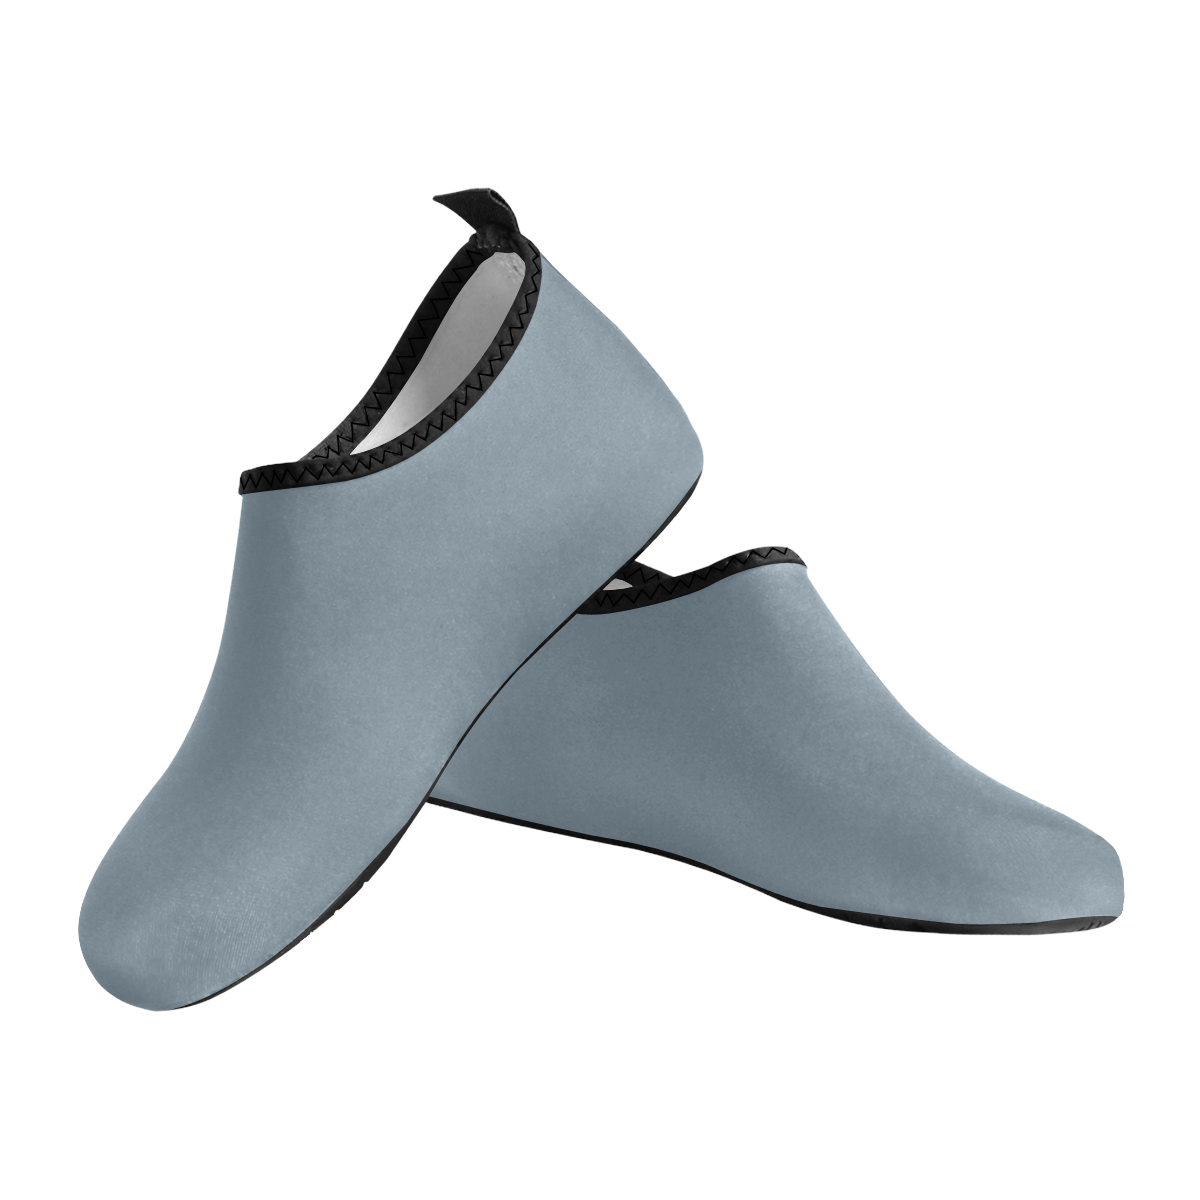 color light slate grey Men's Slip-On Water Shoes (Model 056)